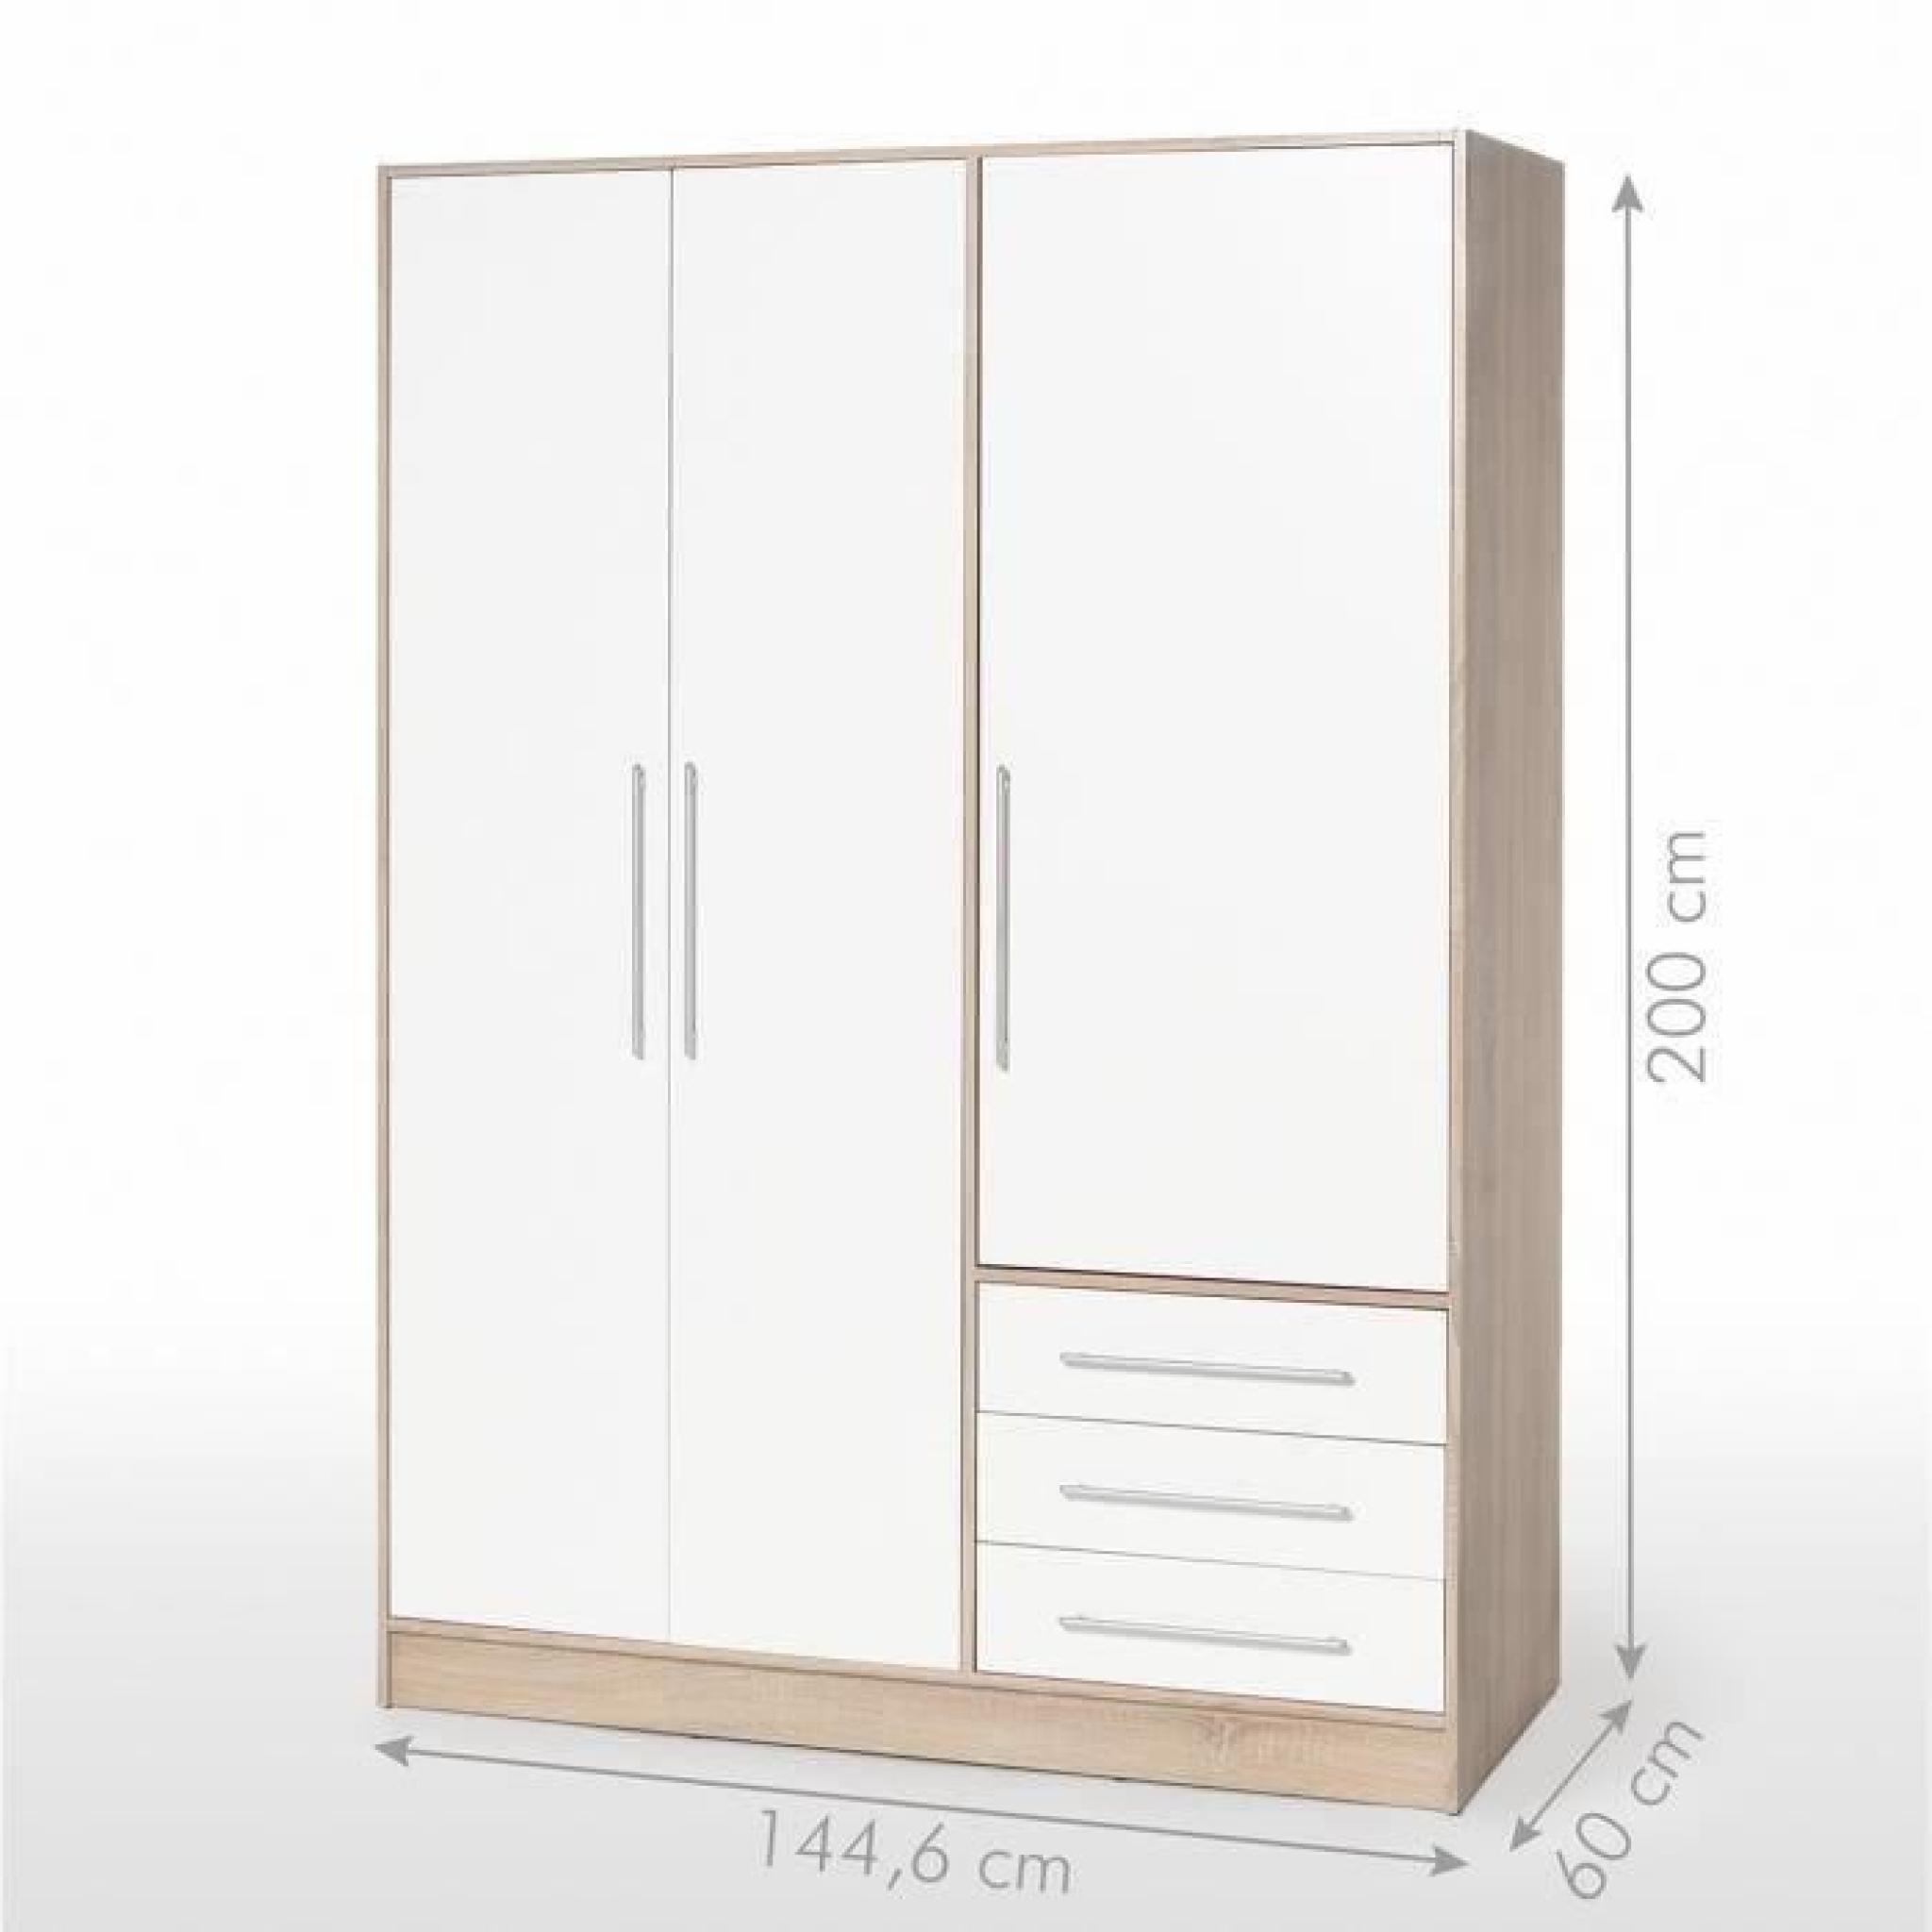 JUPITER armoire 145 cm chêne/blanc